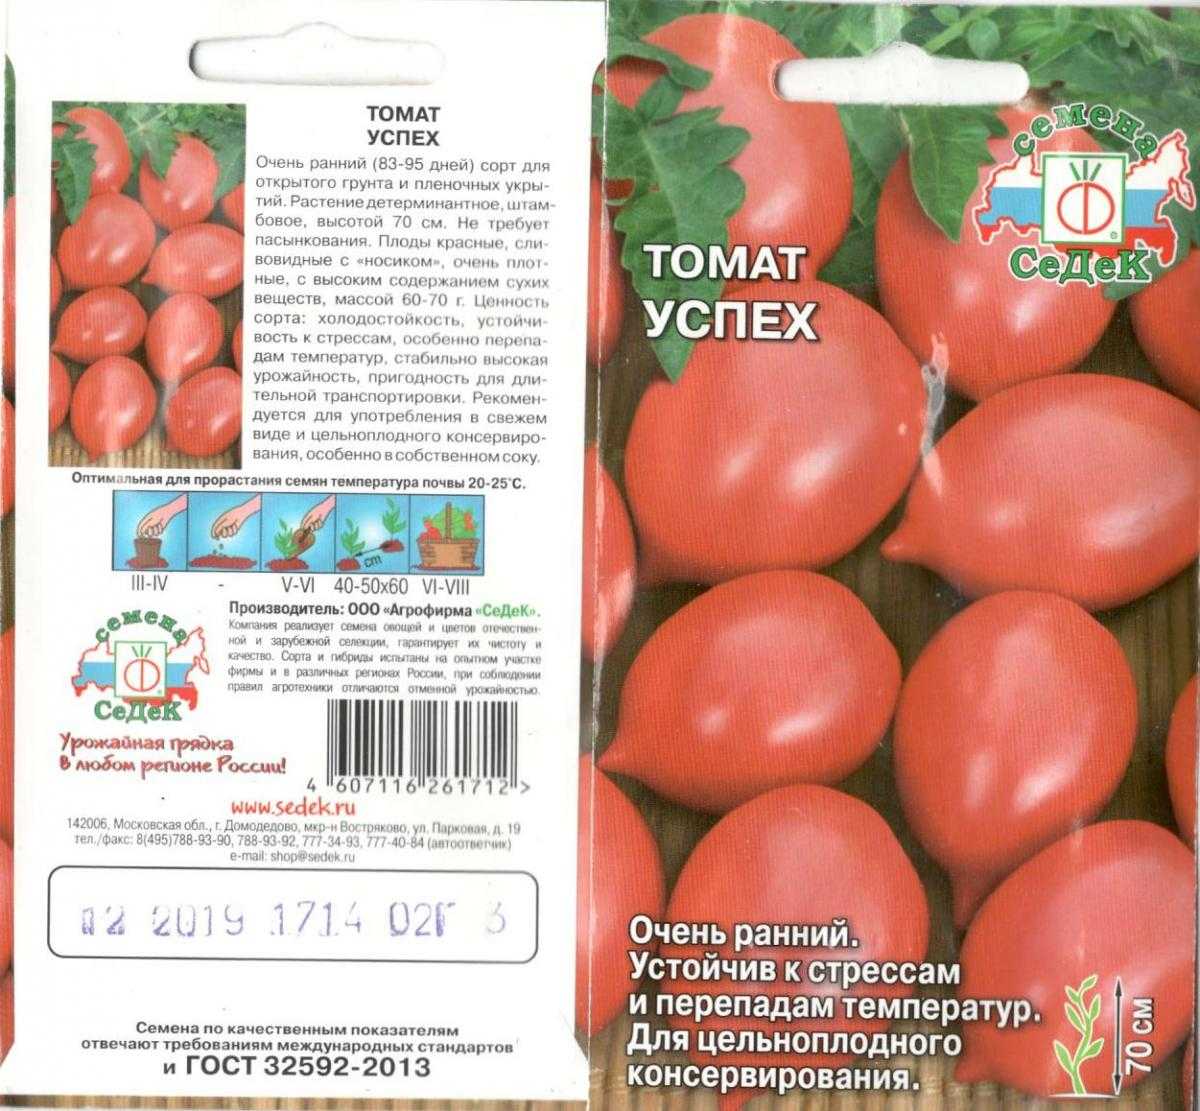 Чудо рынка томат описание сорта характеристика фото